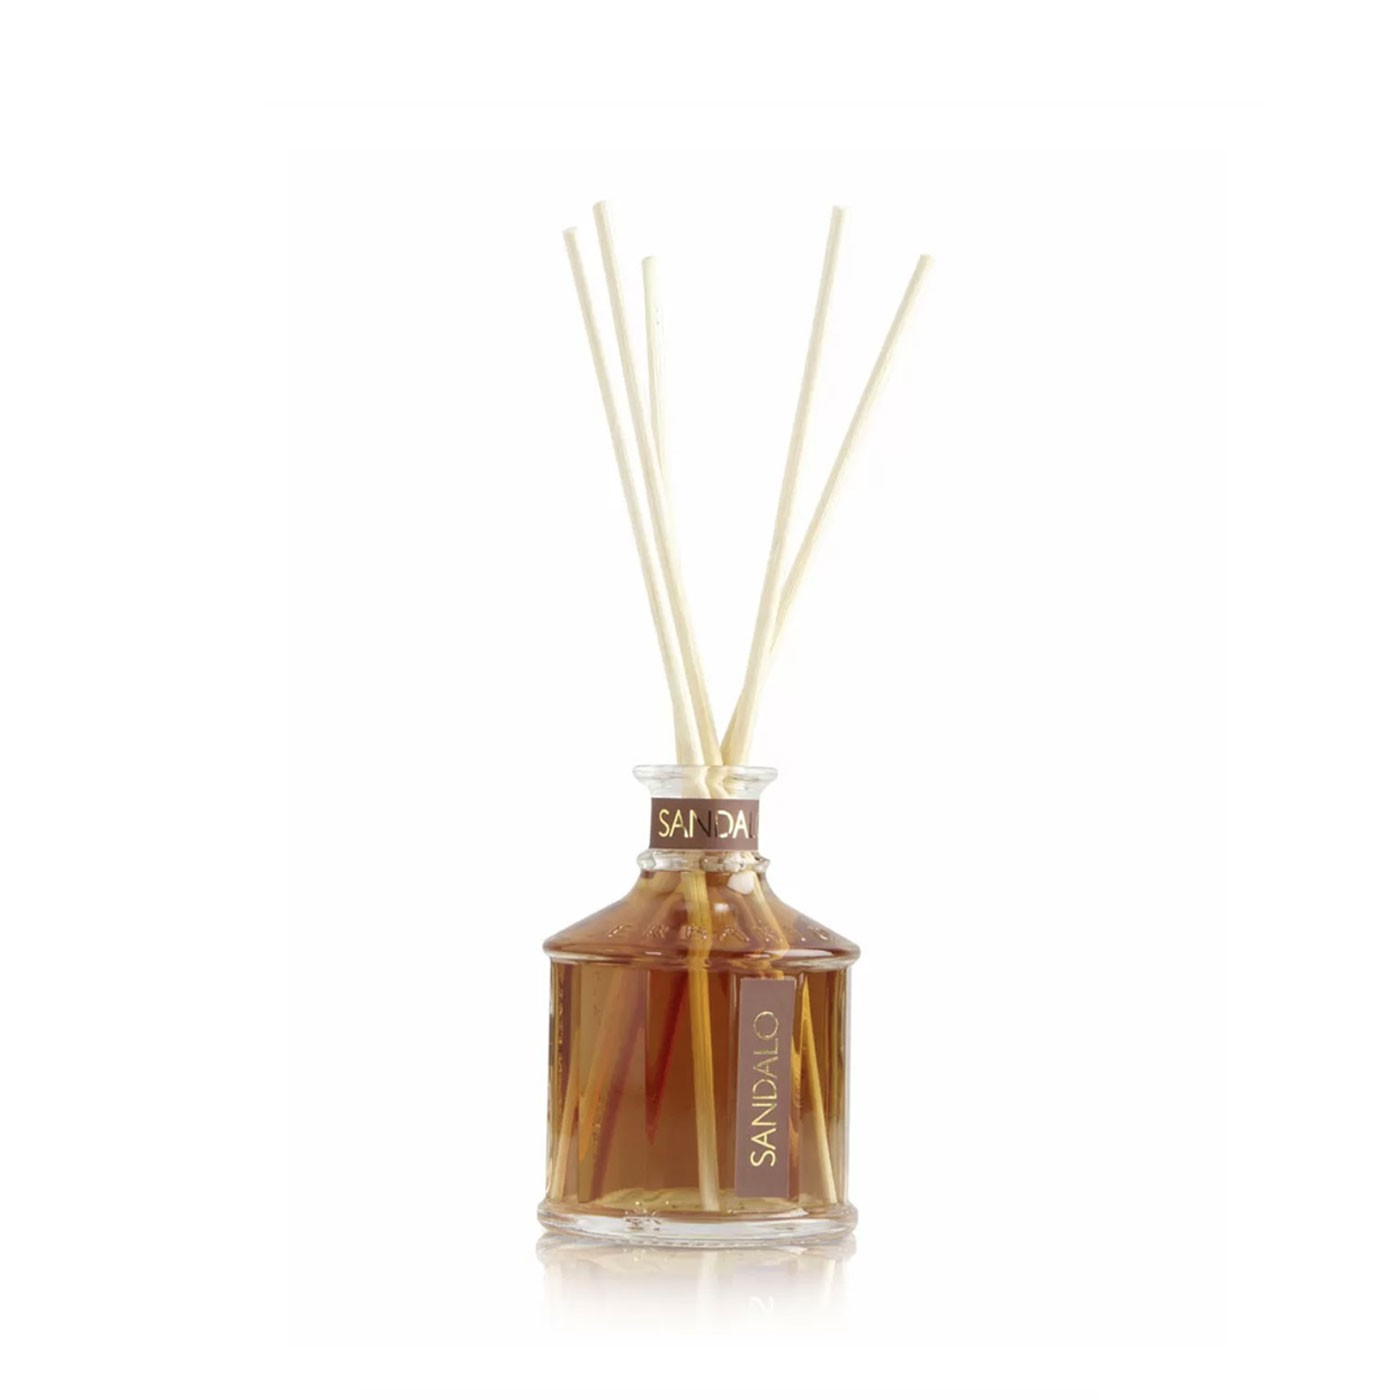 Sandalwood Fragrance Diffuser 8.4 oz - Erbario Toscano | Eataly.com